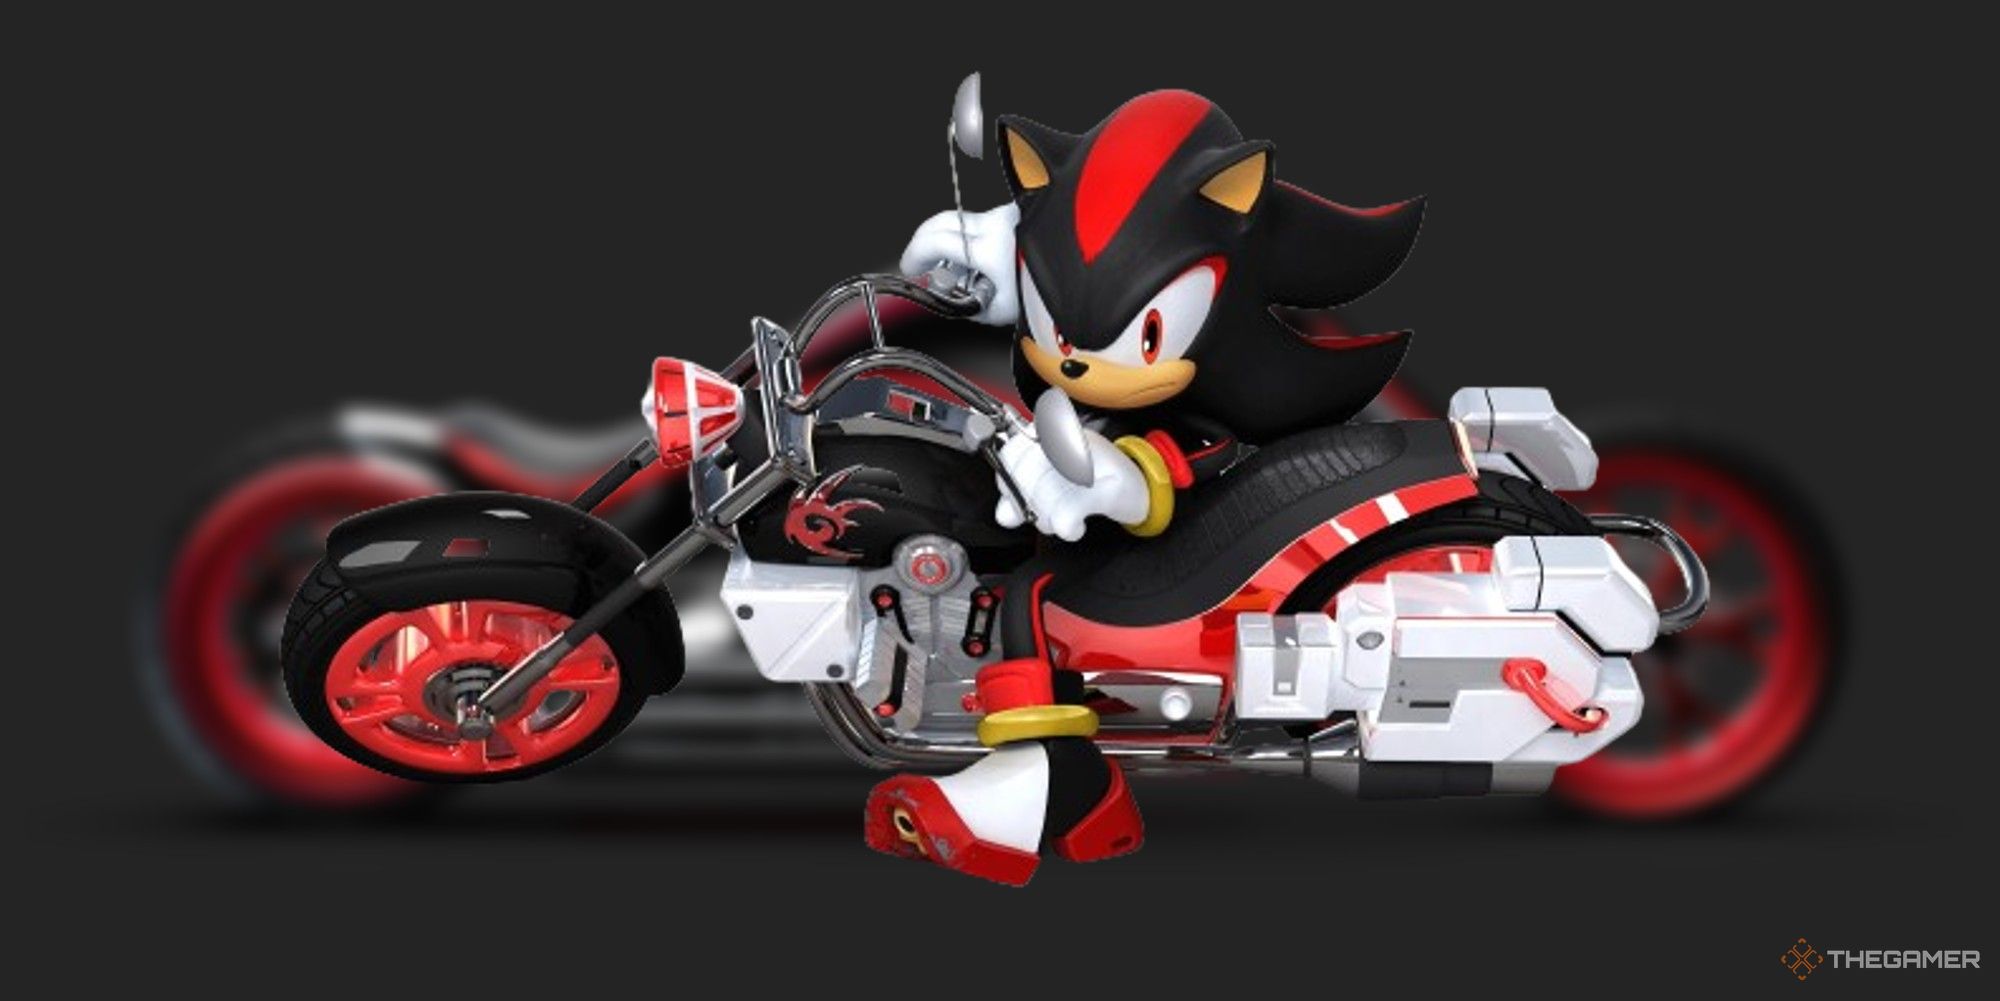 shadow the hedgehog on his dark rider motorcycle